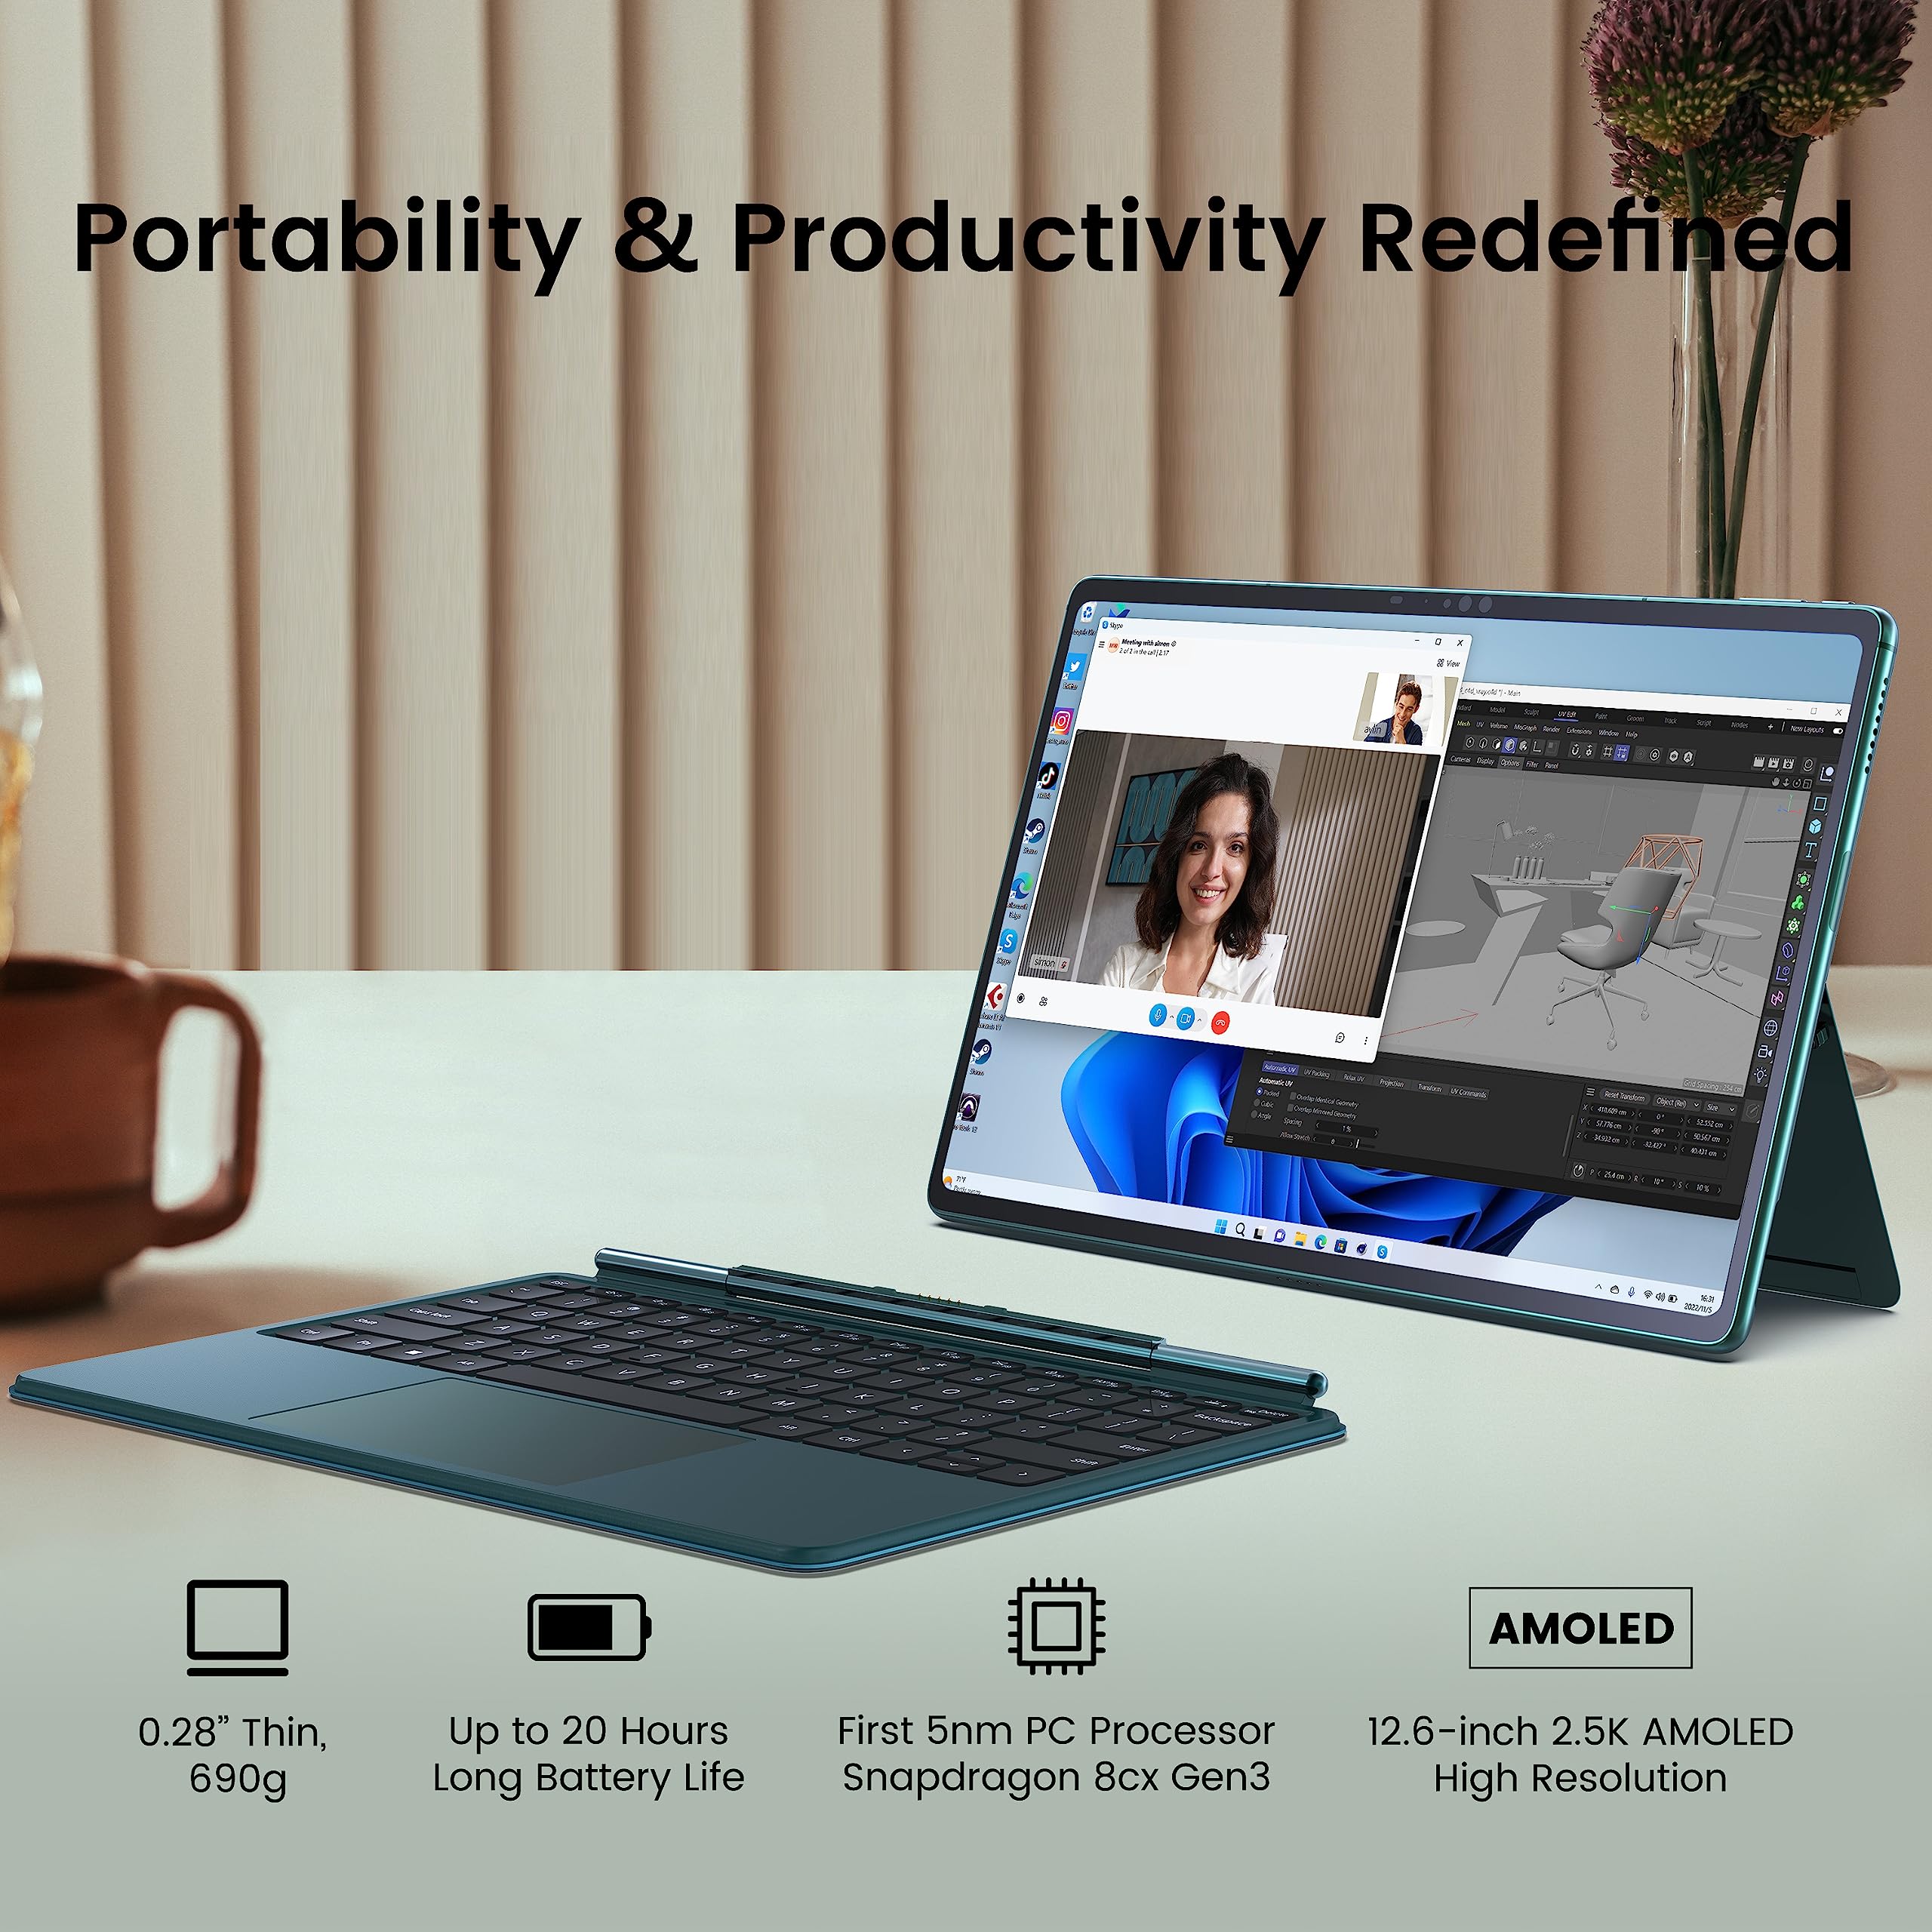 Robo & Kala 2 in 1 Laptop, 690g Lightweight, Up to 20H Long Battery Life, 12.6’AMOLED Touchscreen, Snapdragon 5nm PC Processor, 16GB RAM, 512GB SSD, WiFi Bluetooth, Win 11, 4K Webcam, Backlit Keyboard